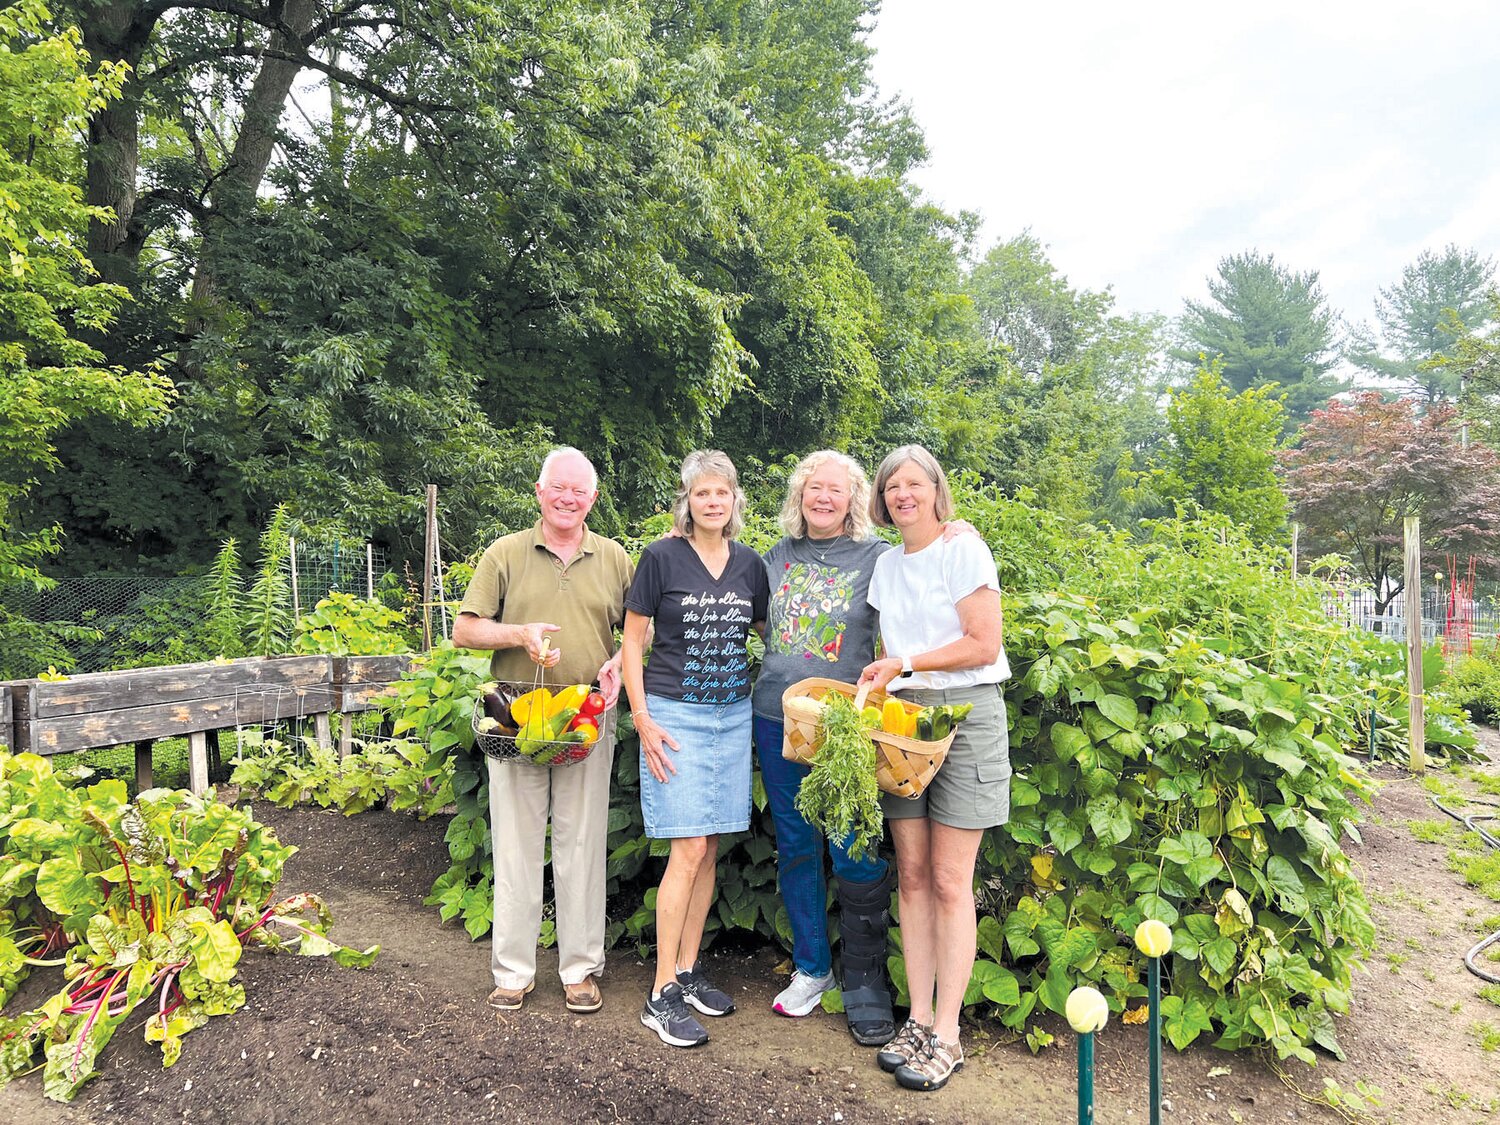 God's Garden of Eatin' volunteers and DUMC members, from left, are Dave Merrick, Rhelda Richards, Barb Rocca and Janet Nier.